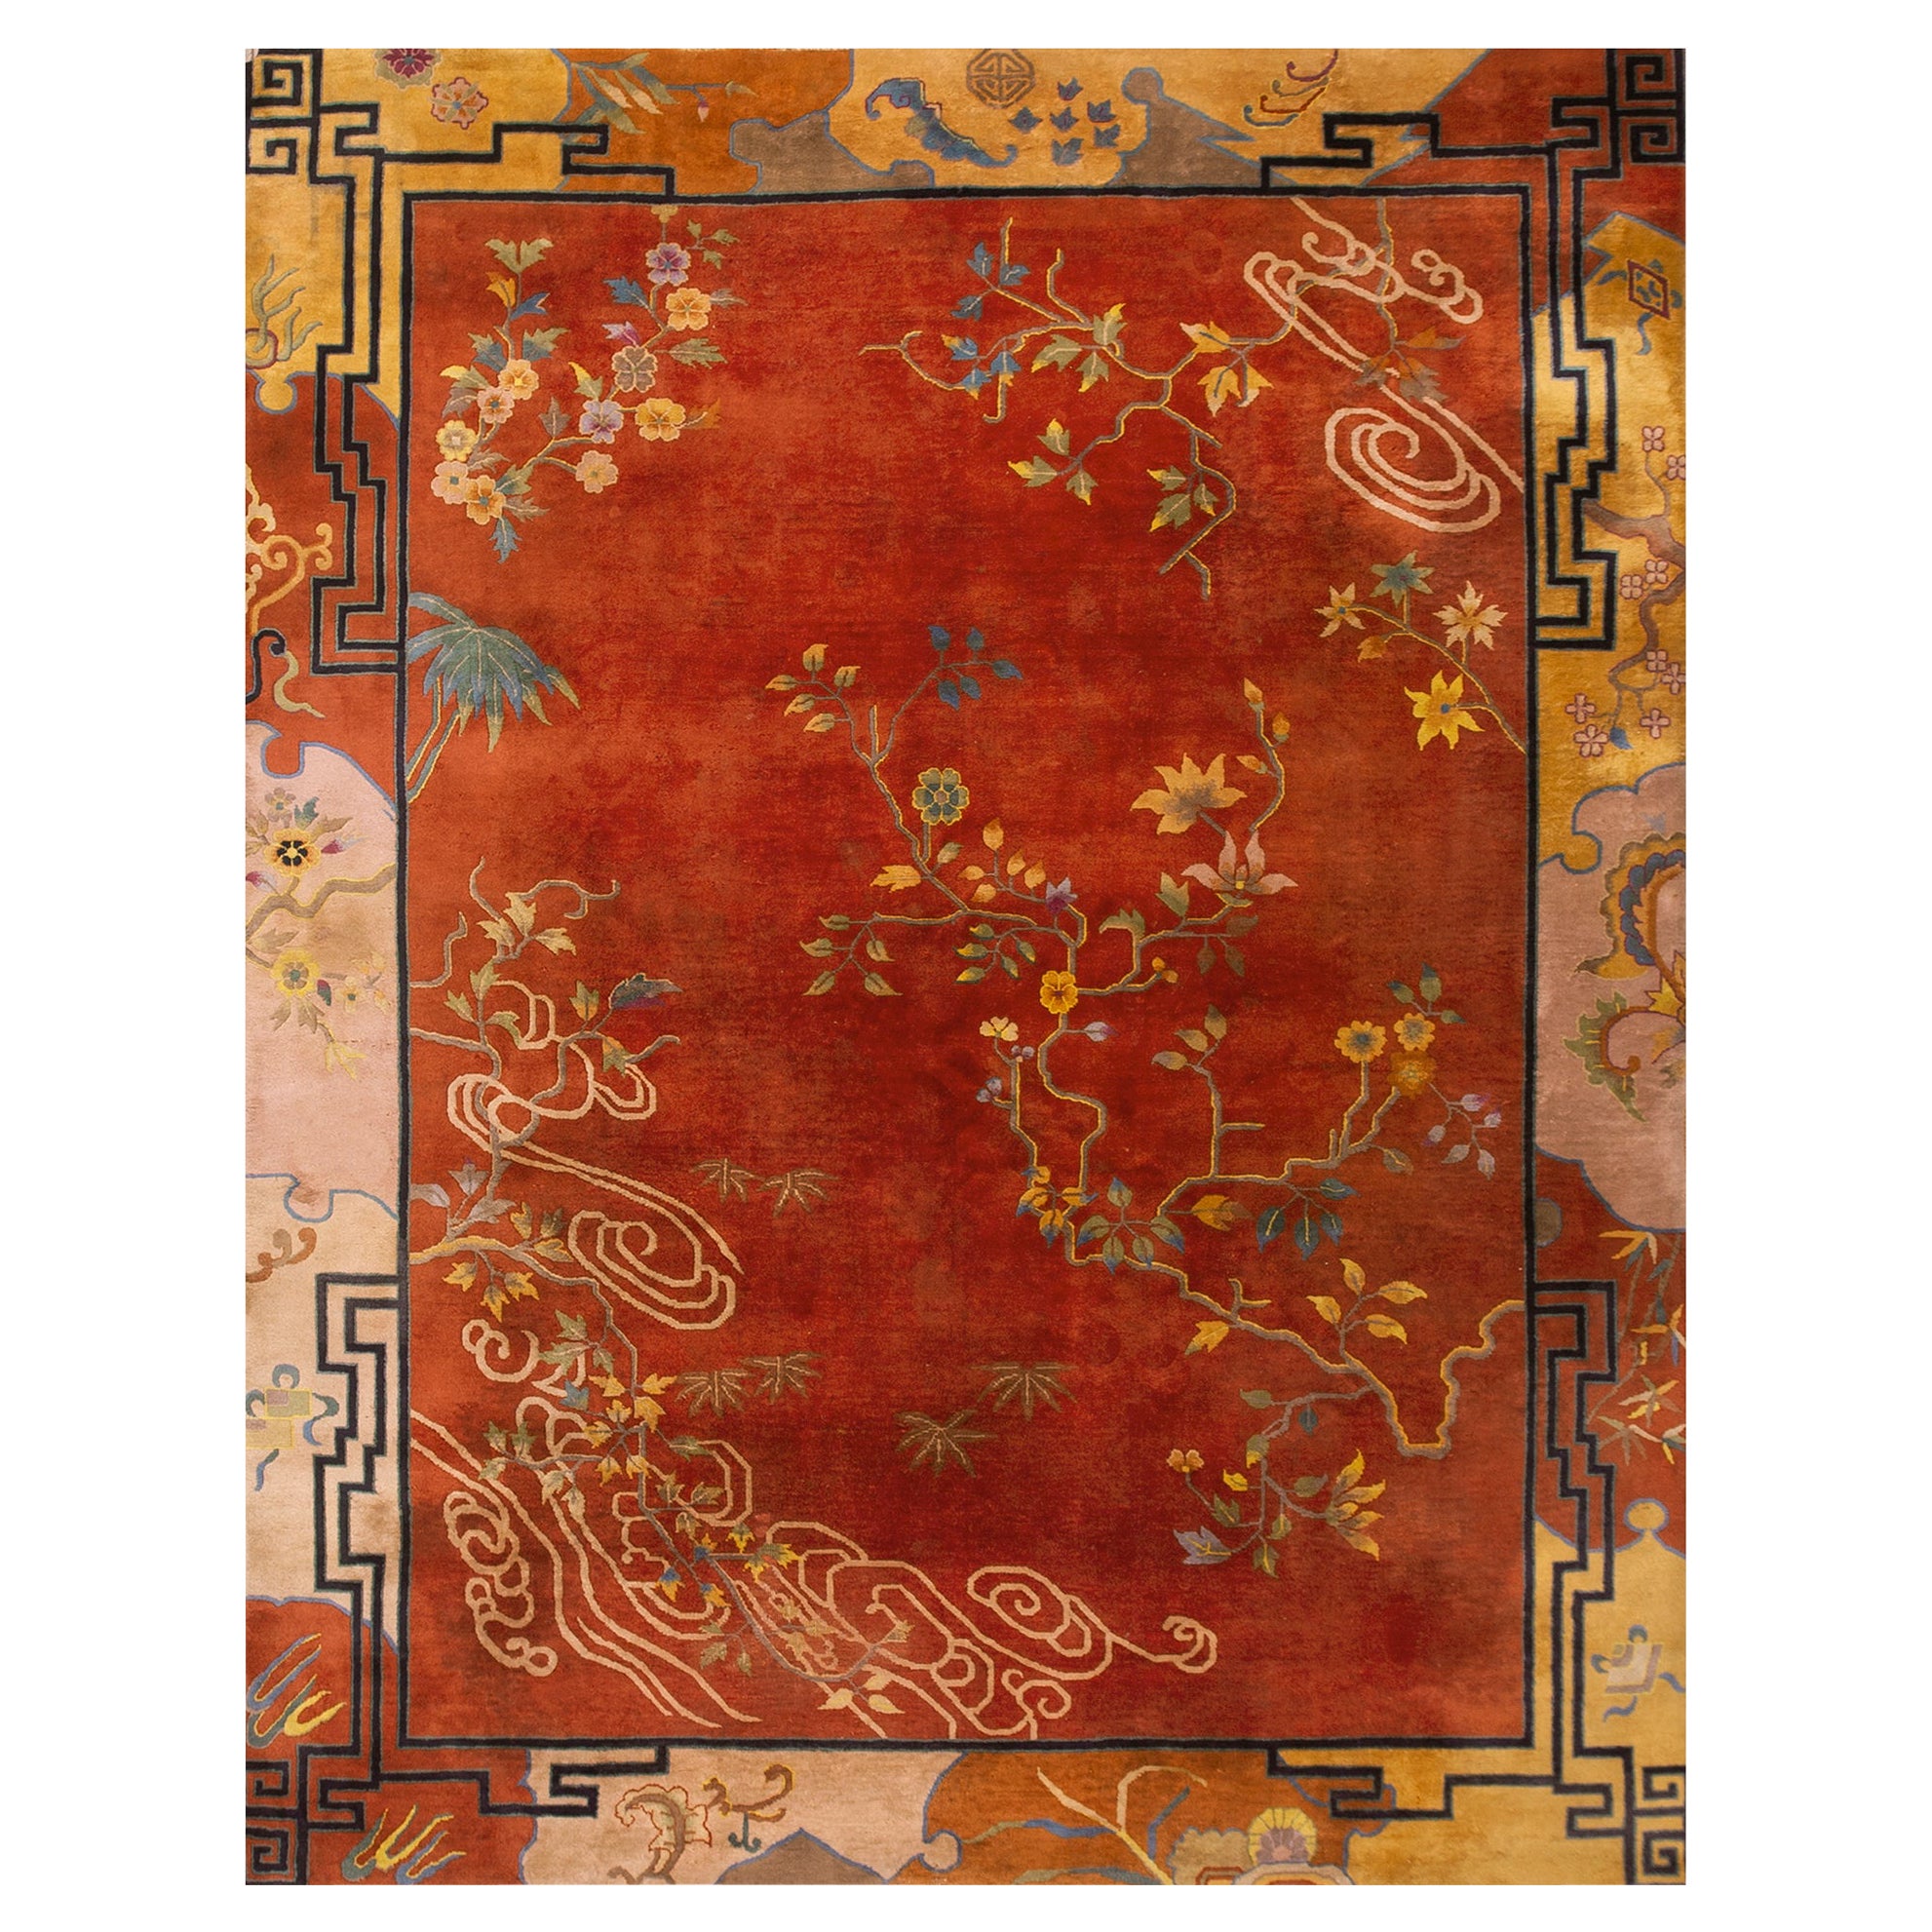 1920s Chinese Art  Deco Carpet ( 9' x 11' 6" - 275 x 350 cm )  For Sale